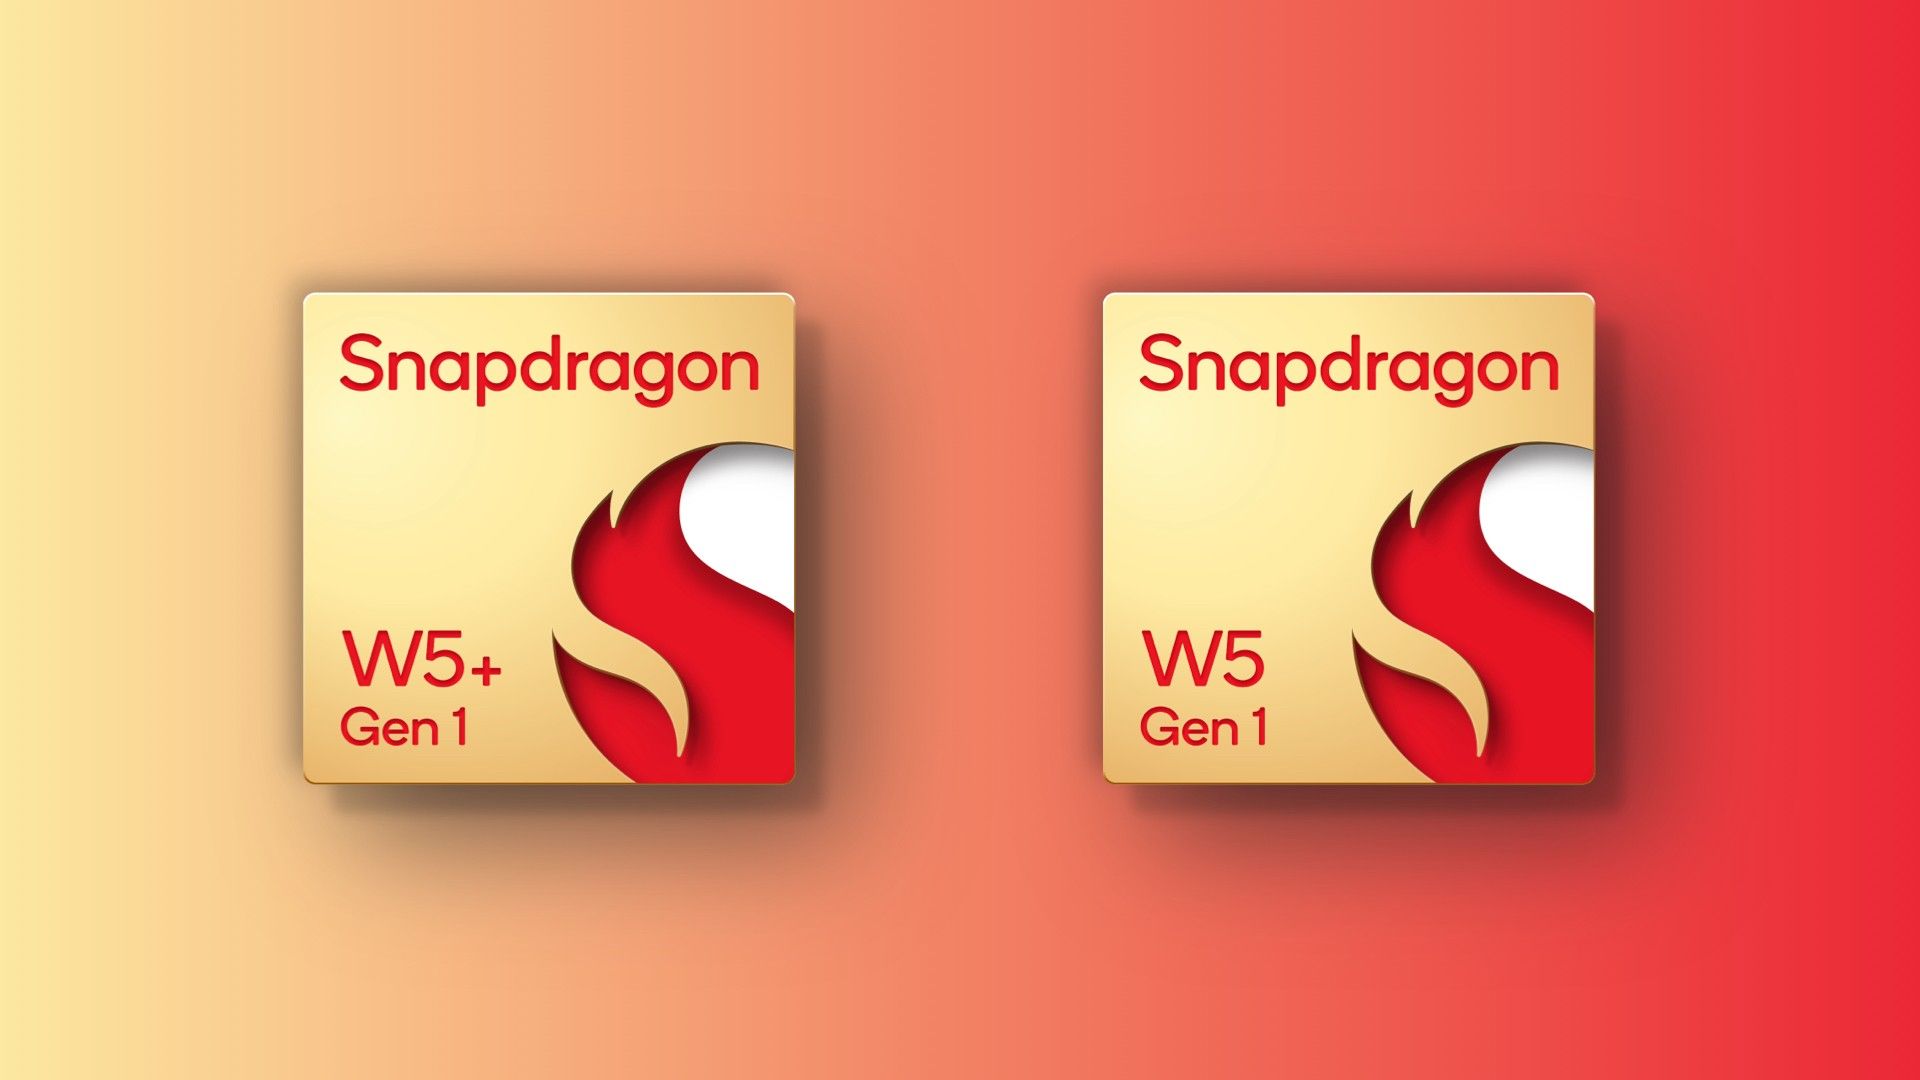 Snapdragon W5 Gen 1 and W5 Plus Gen 1 images